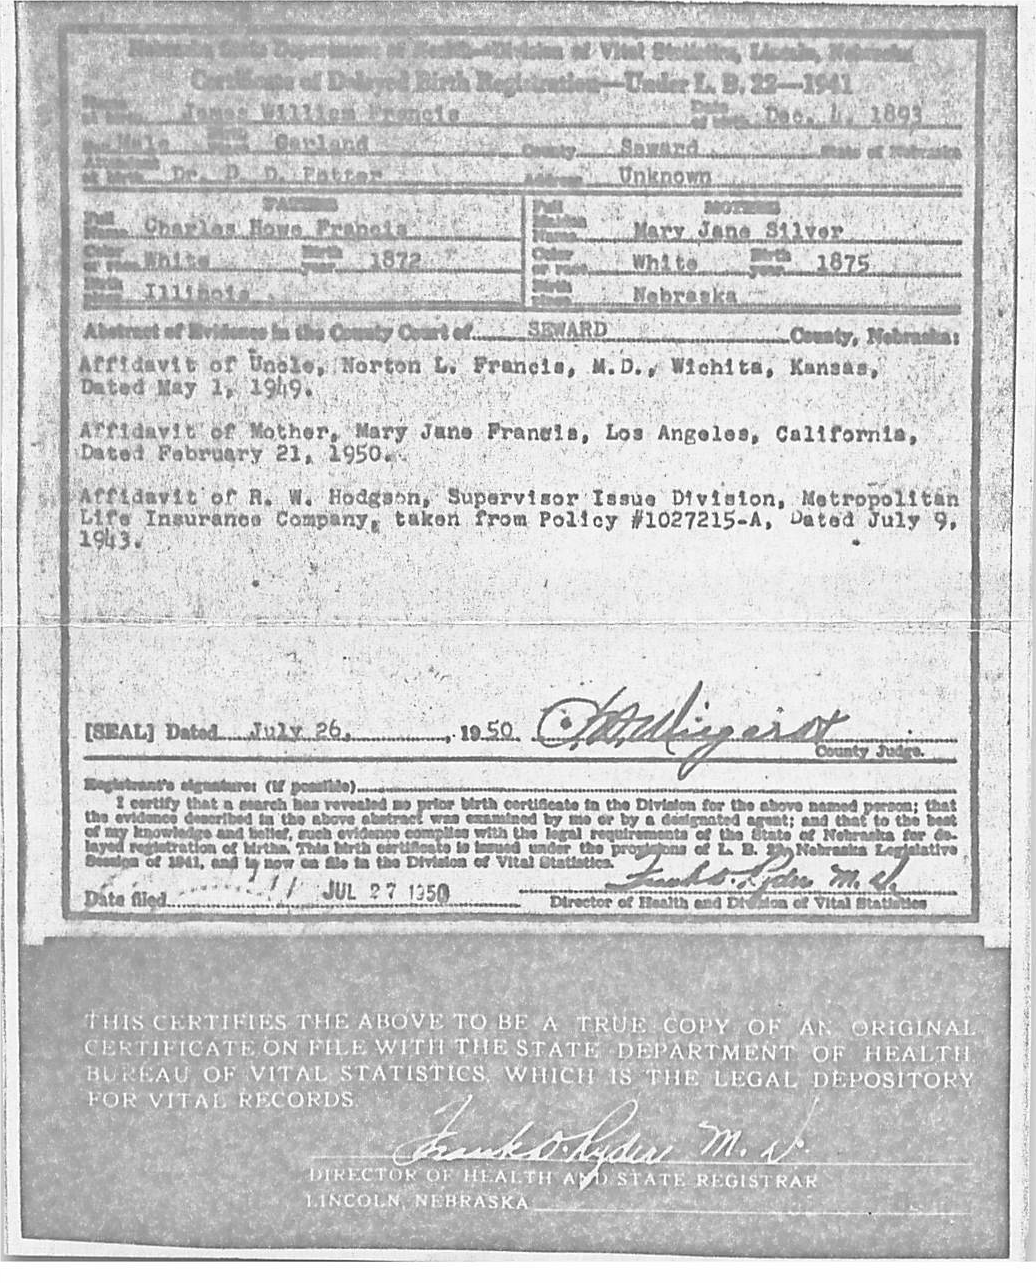  Birth certificate for Bob’s father, James (Jim) William Francis (Dec. 4, 1893, Seward, Neb.-Nov. 13, 1978, Pasadena, Calif.).  